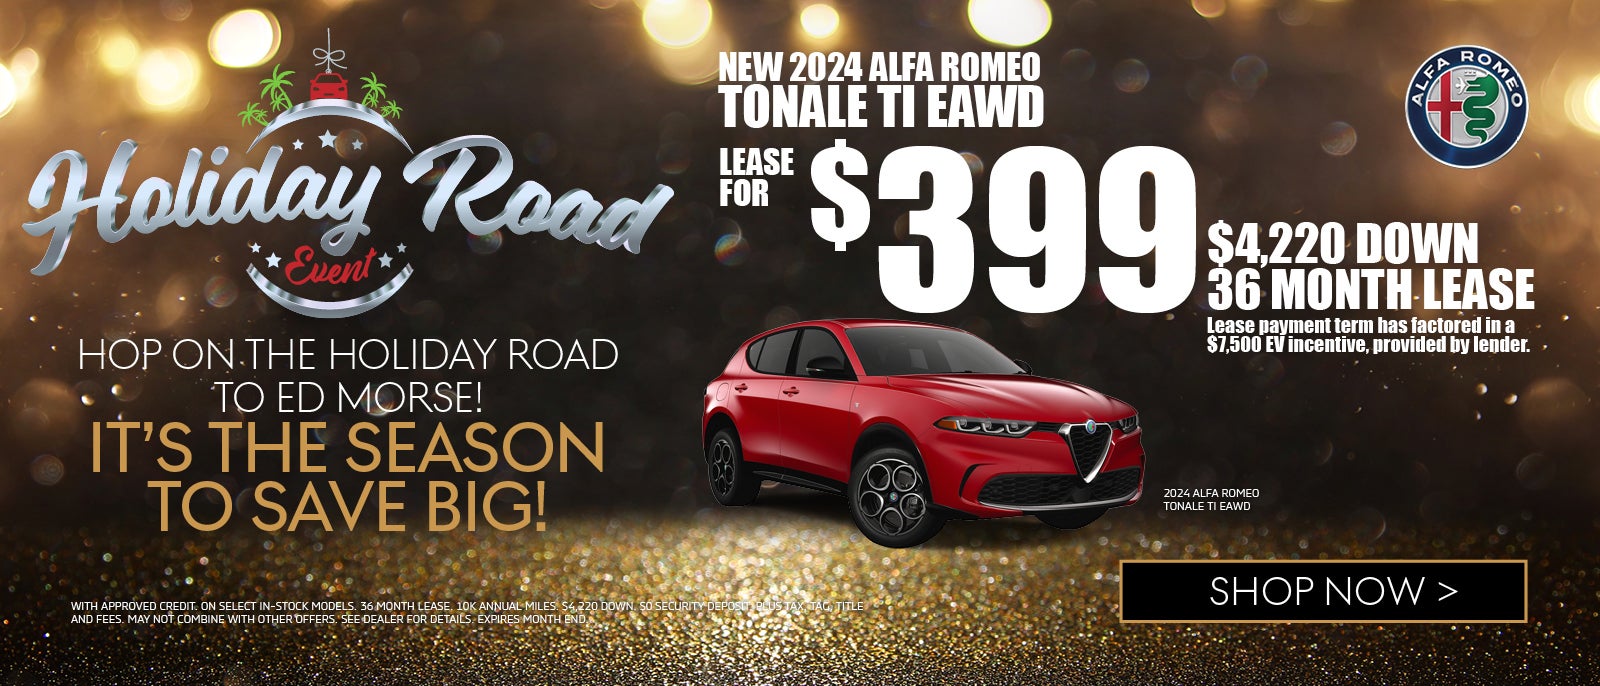 New 2024 Alfa Romeo Tonale TI EAWD